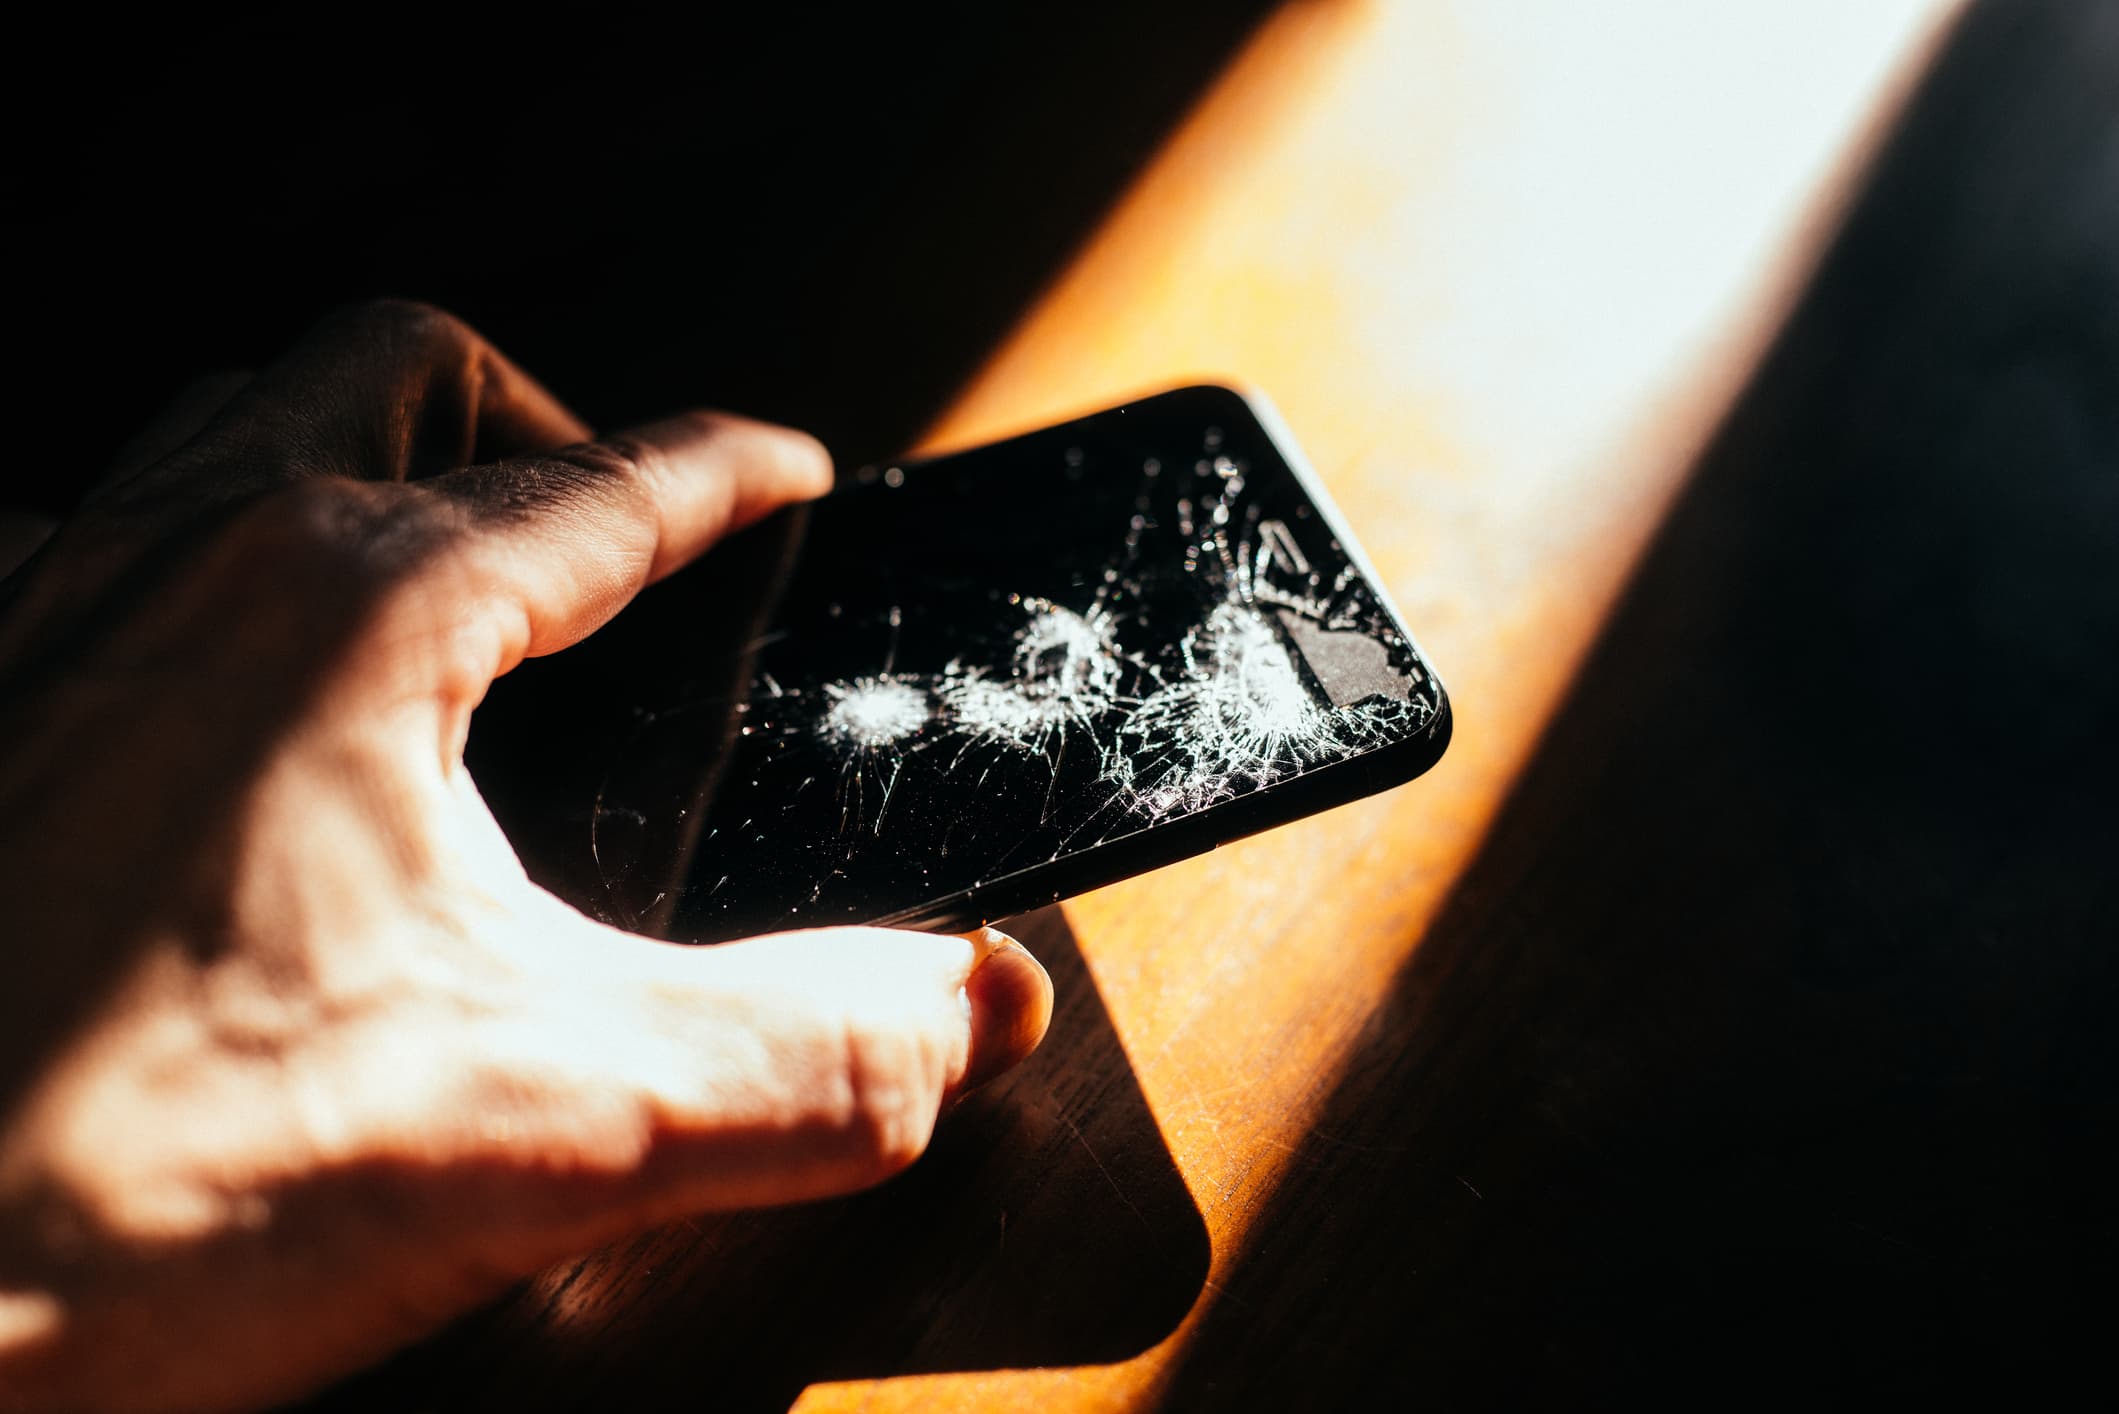 Hand holding damaged mobile phone in light beam.